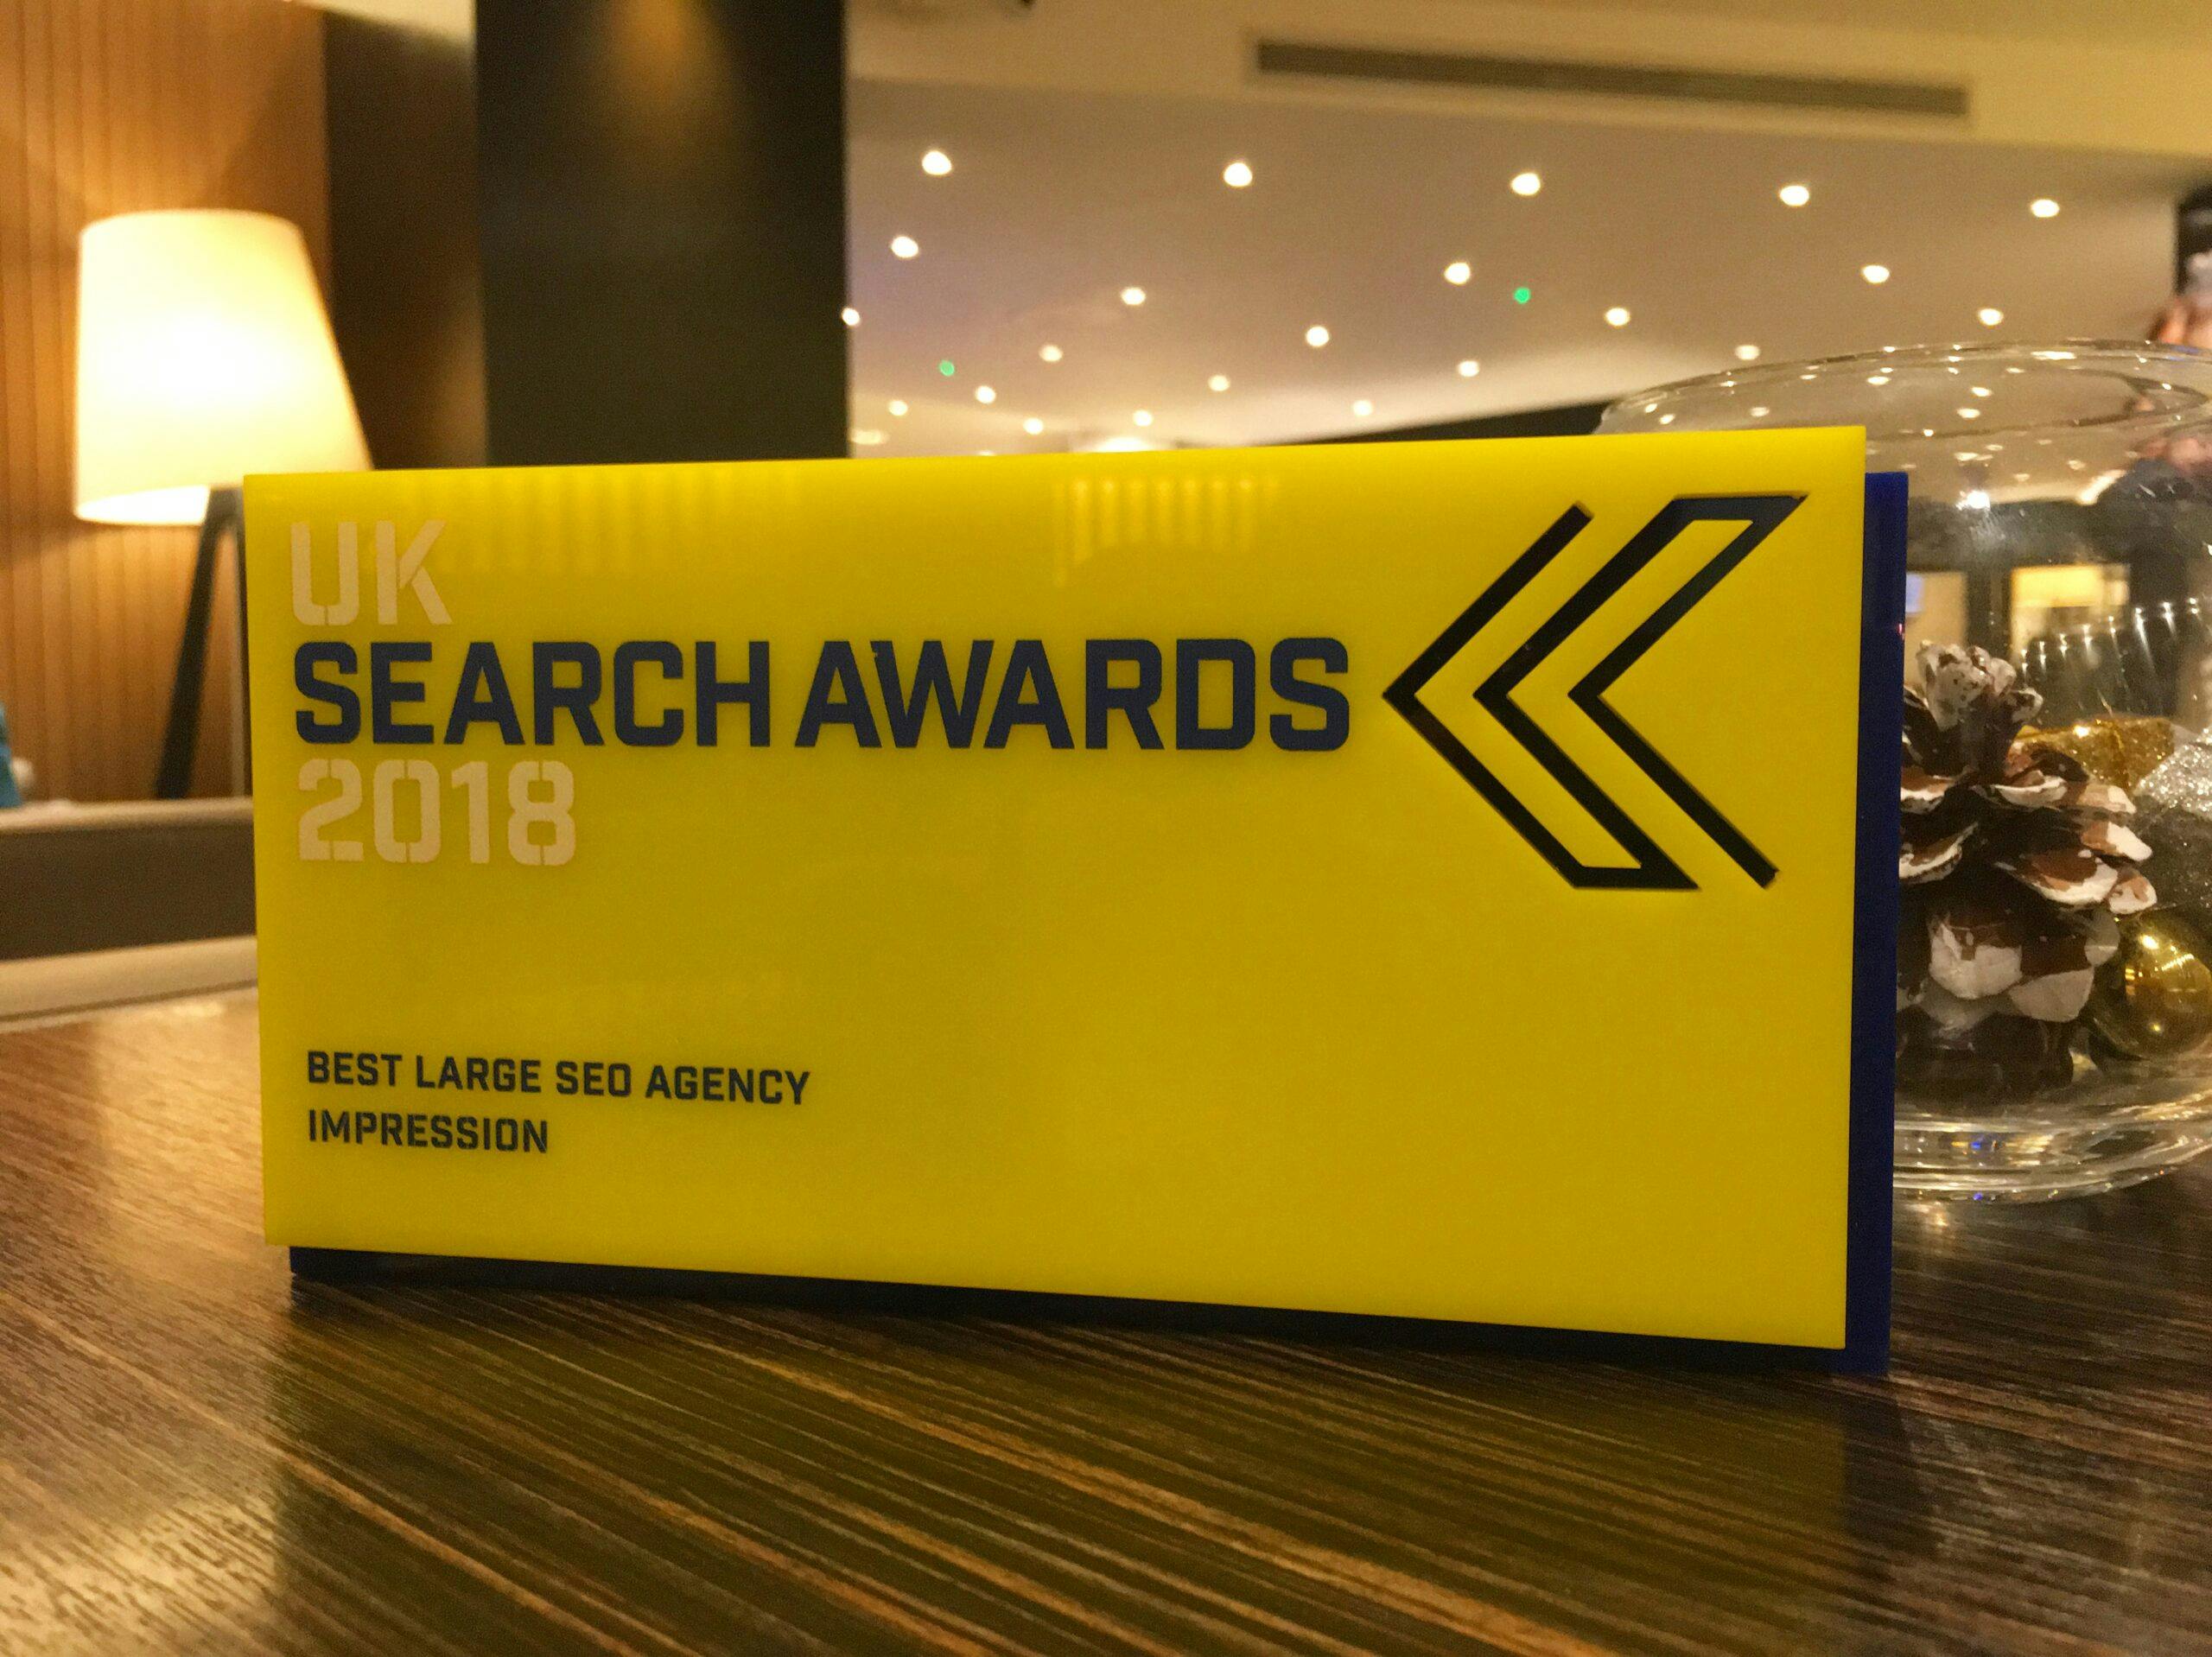 impression best large seo agency uk search awards